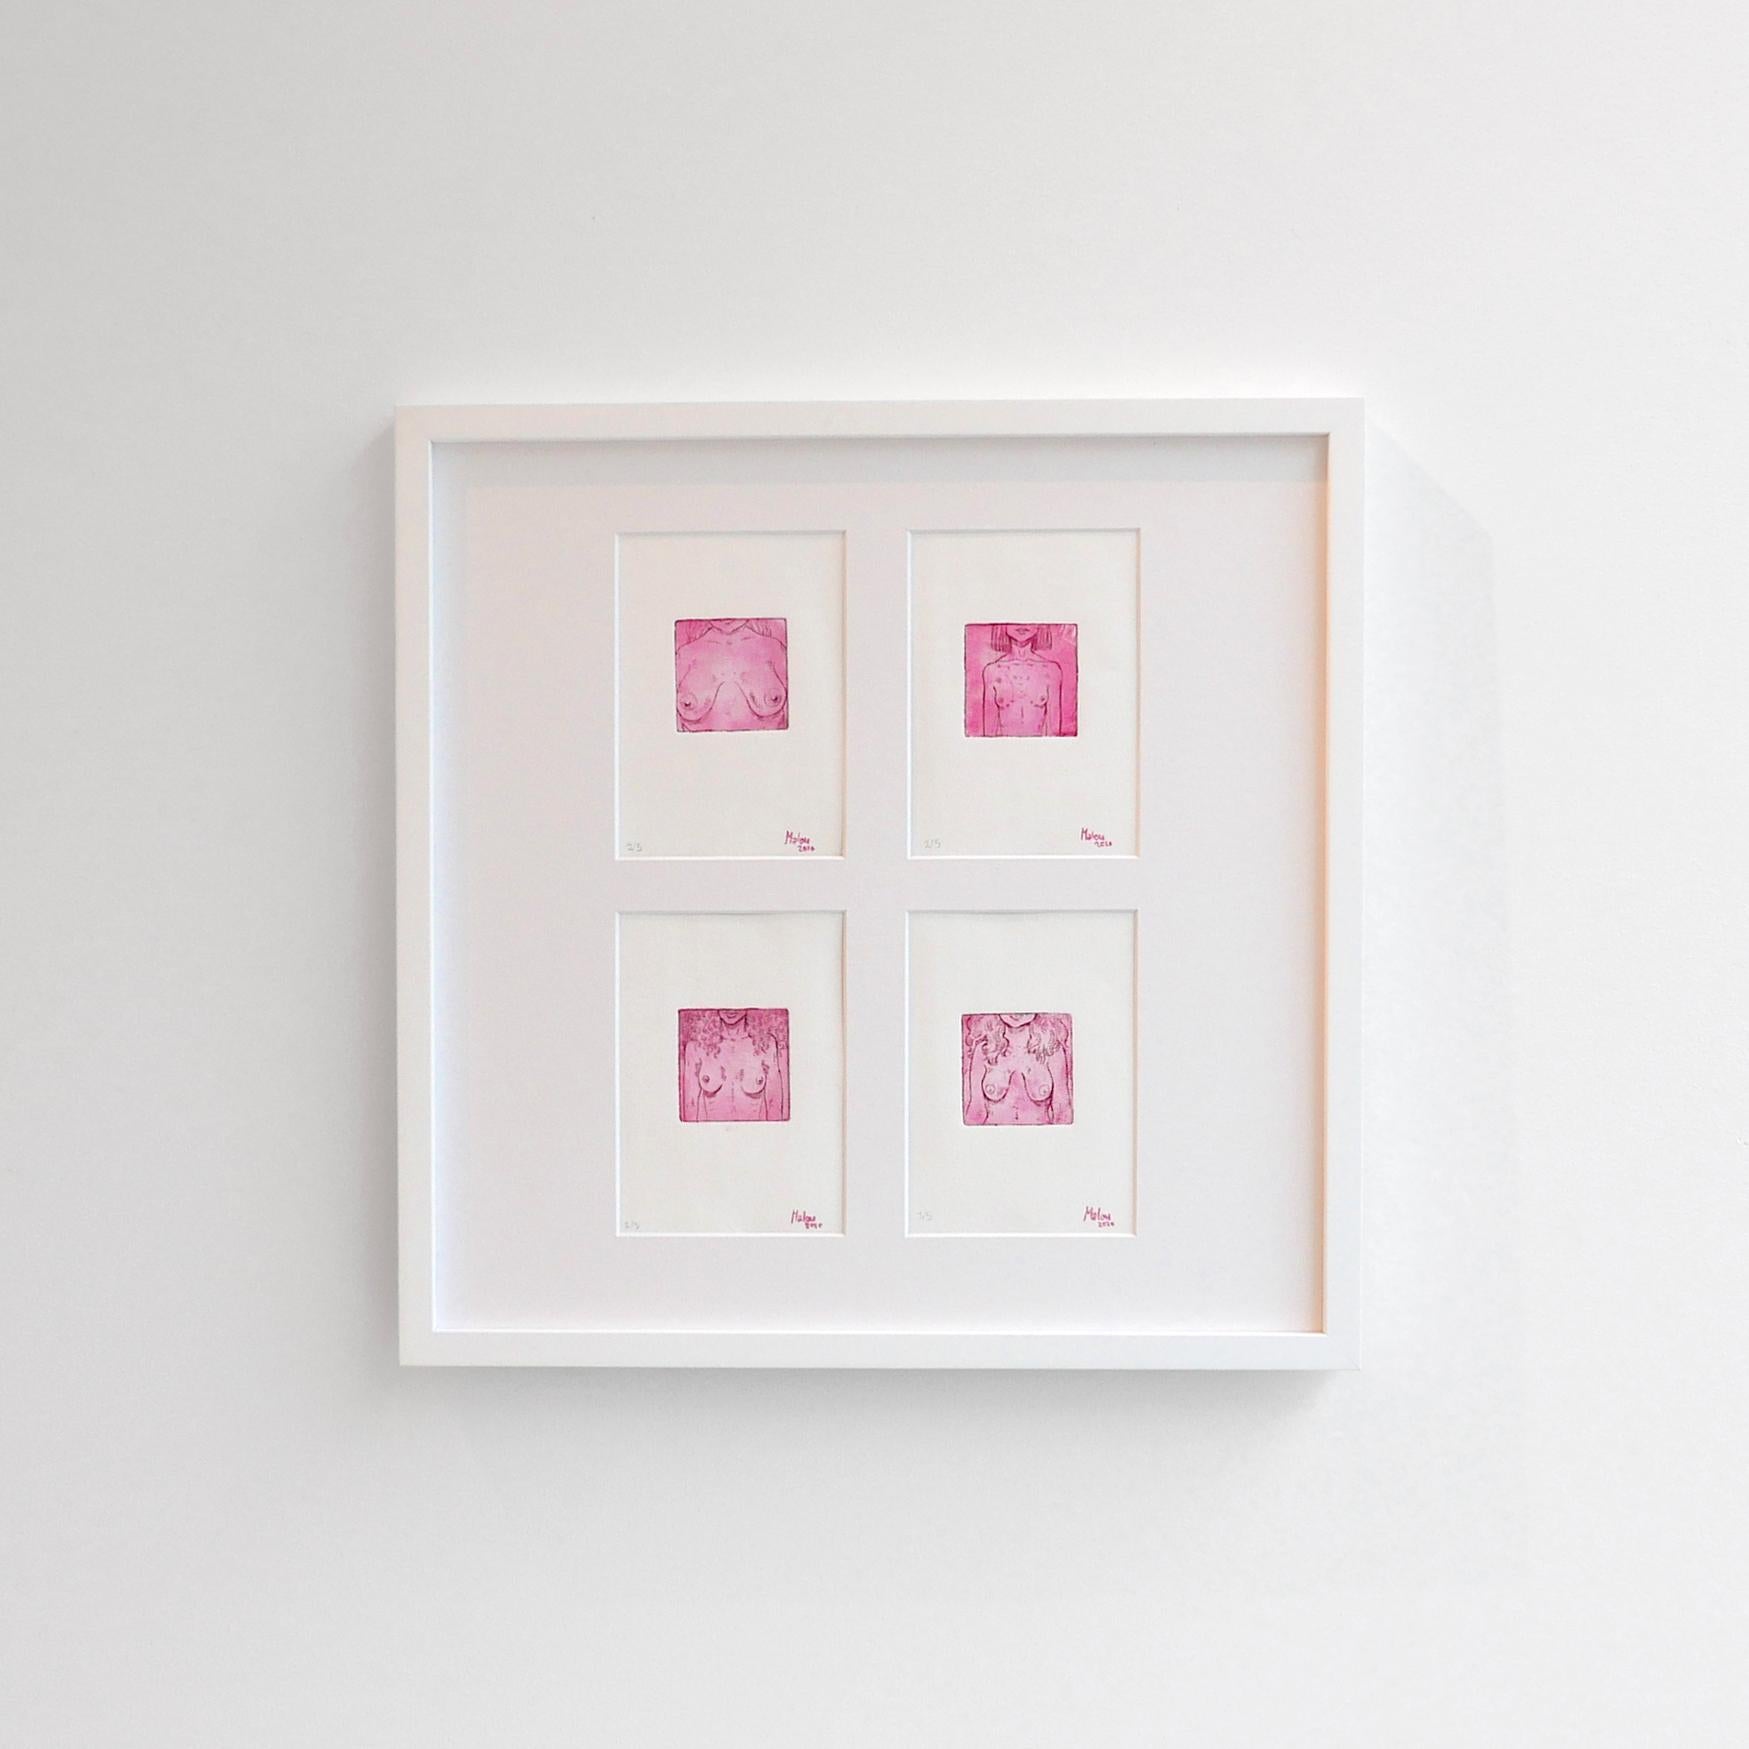 Malou Großklaus Nude Print - Oberkörper 2 - etching, paper, print, pink, white, young artist, 21st century